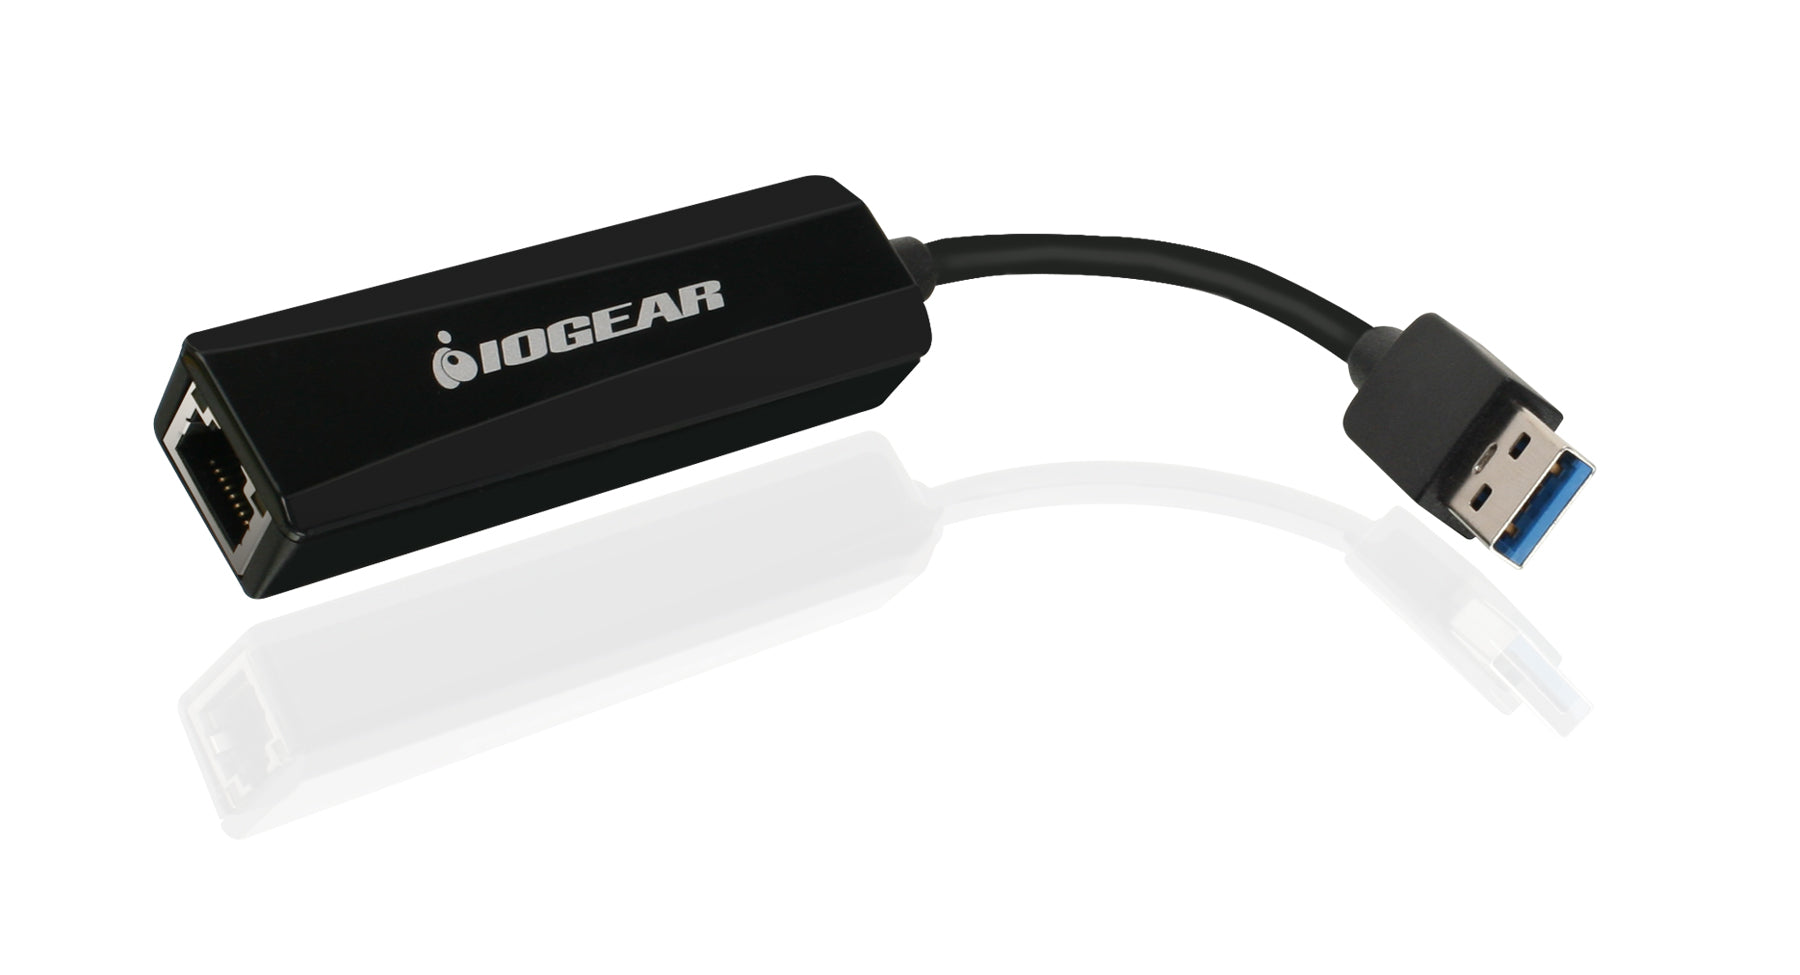 USB 3.0 GigaLinq - Gigabit Ethernet Adapter over USB